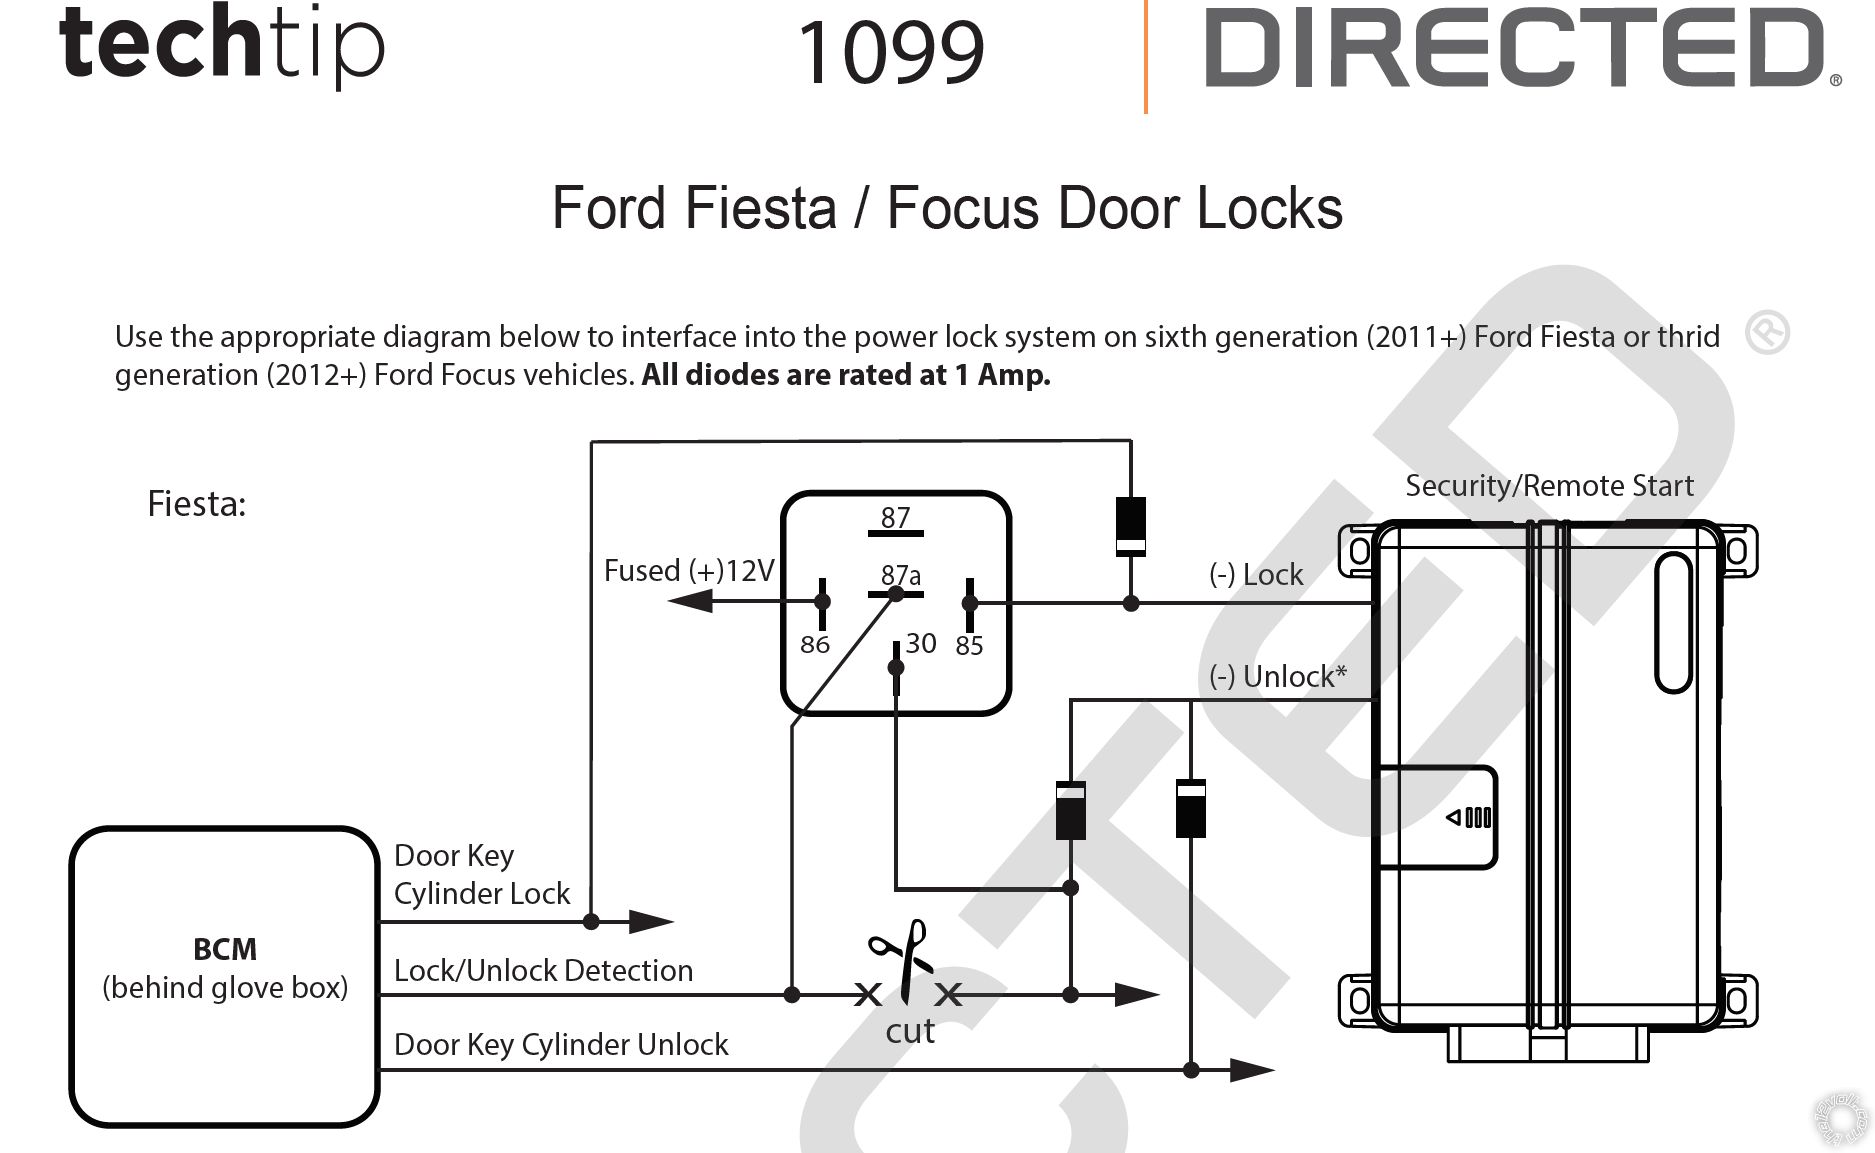 2015 Ford Fiesta, Door Locks -- posted image.